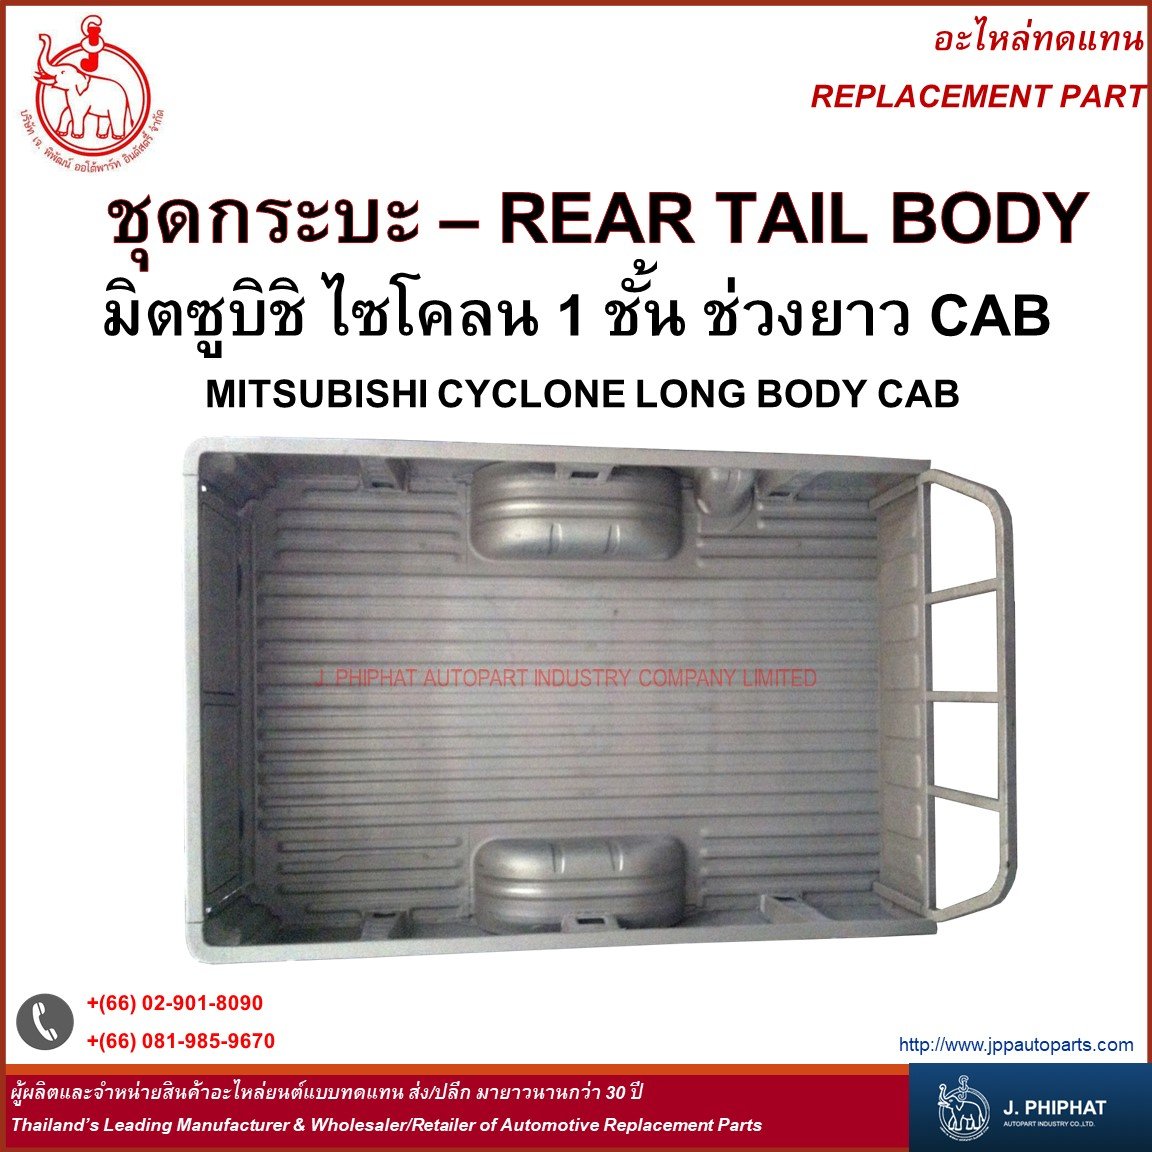 Rear Tail Body - Mitsubishi Cyclone Long Body CAB